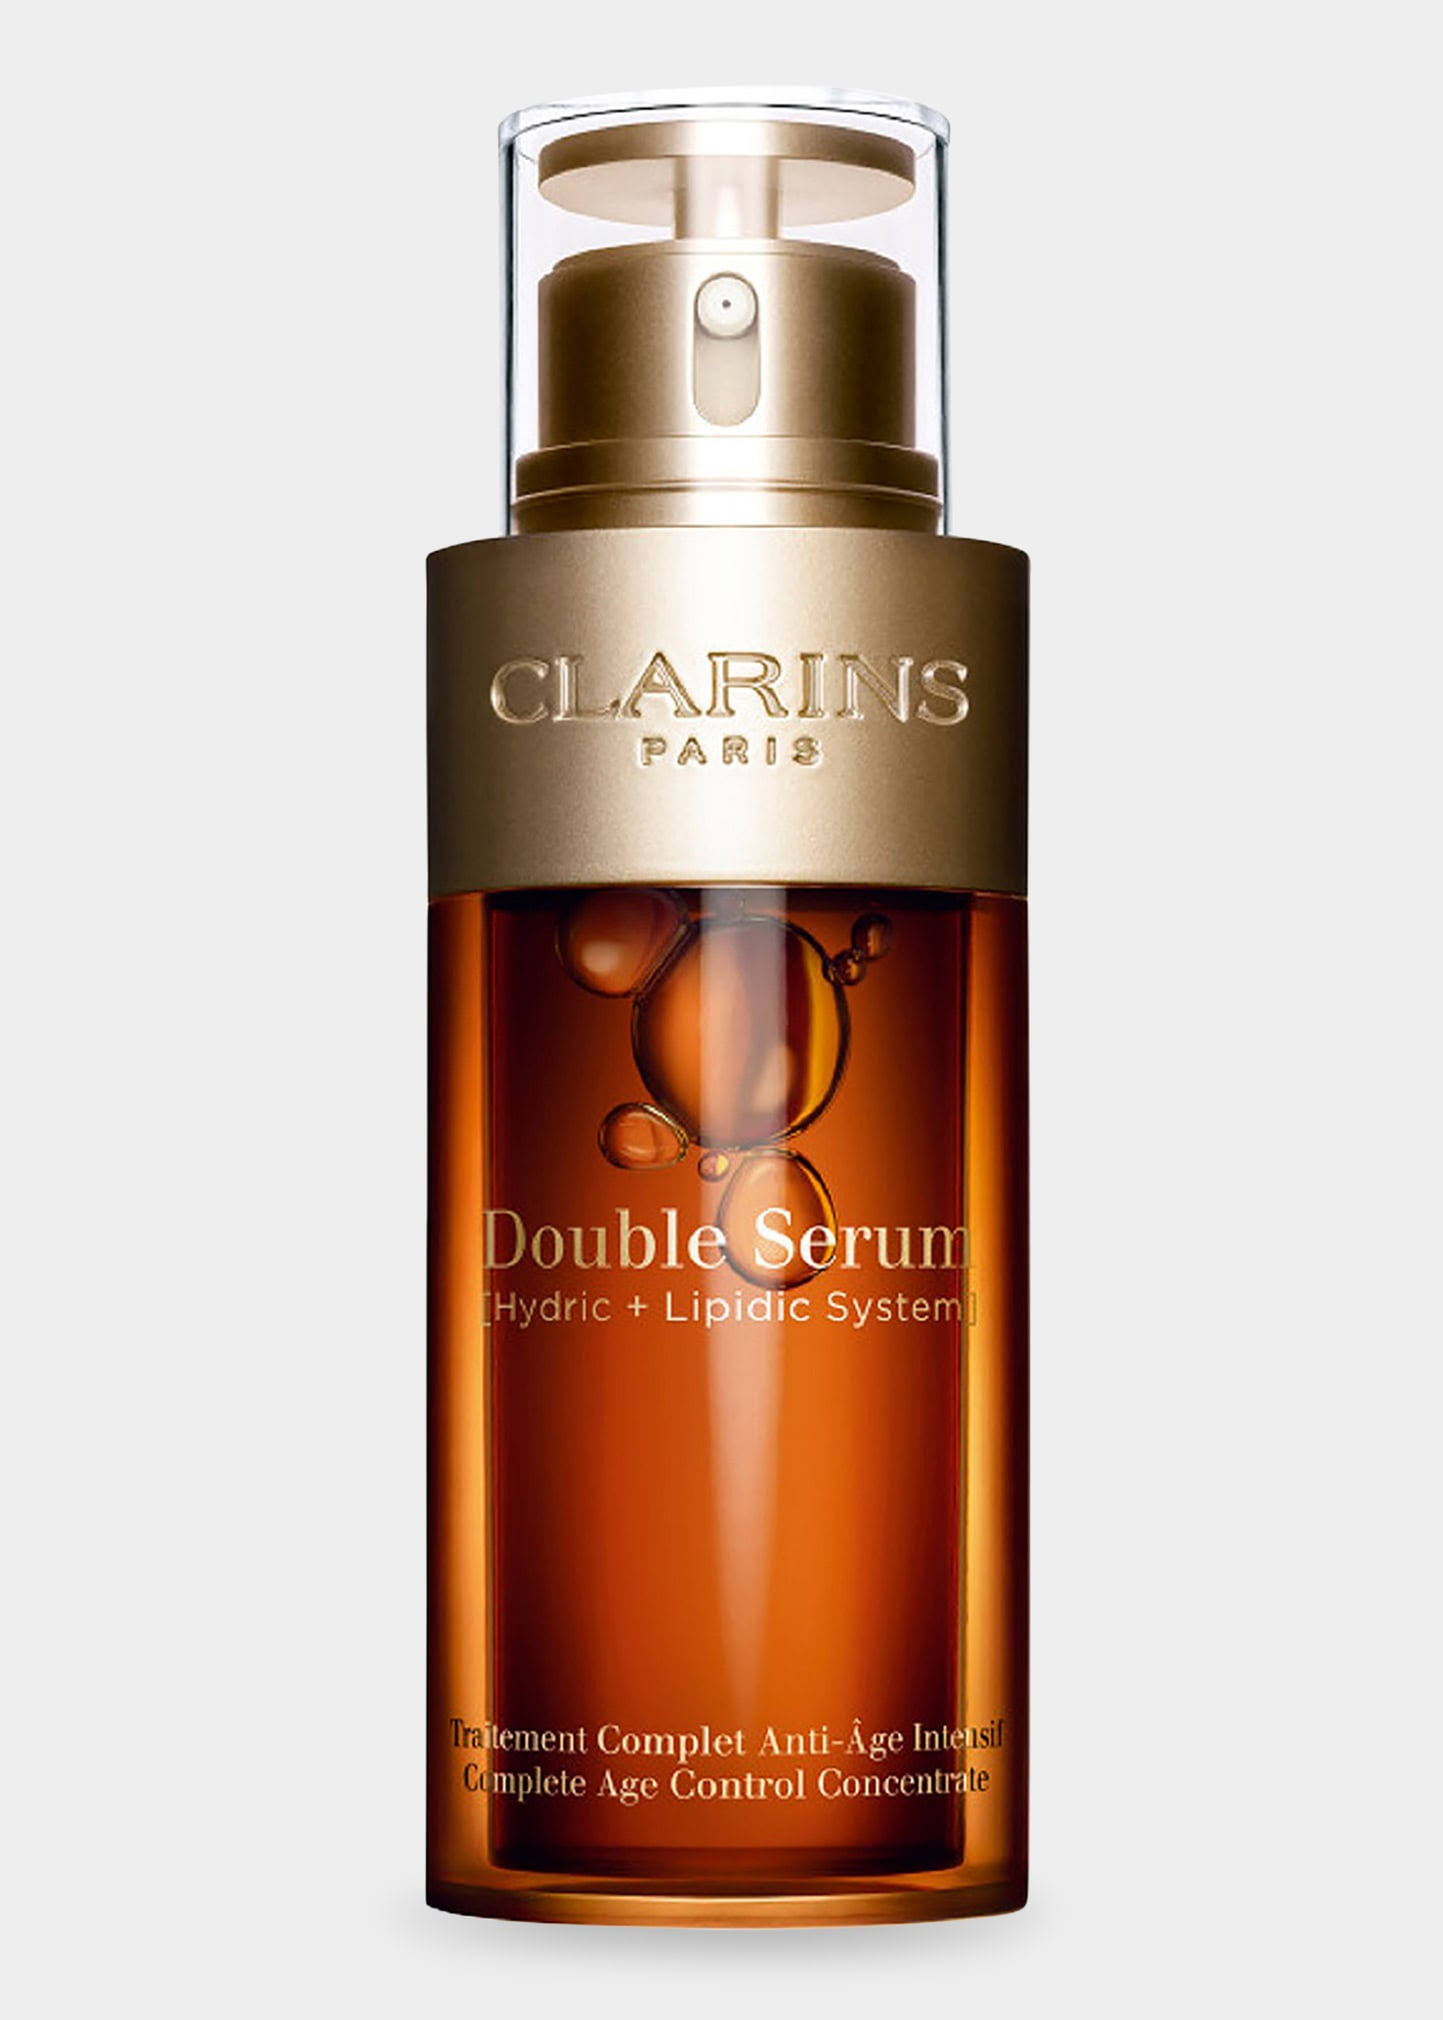 Clarins Double Serum 75.0 mL